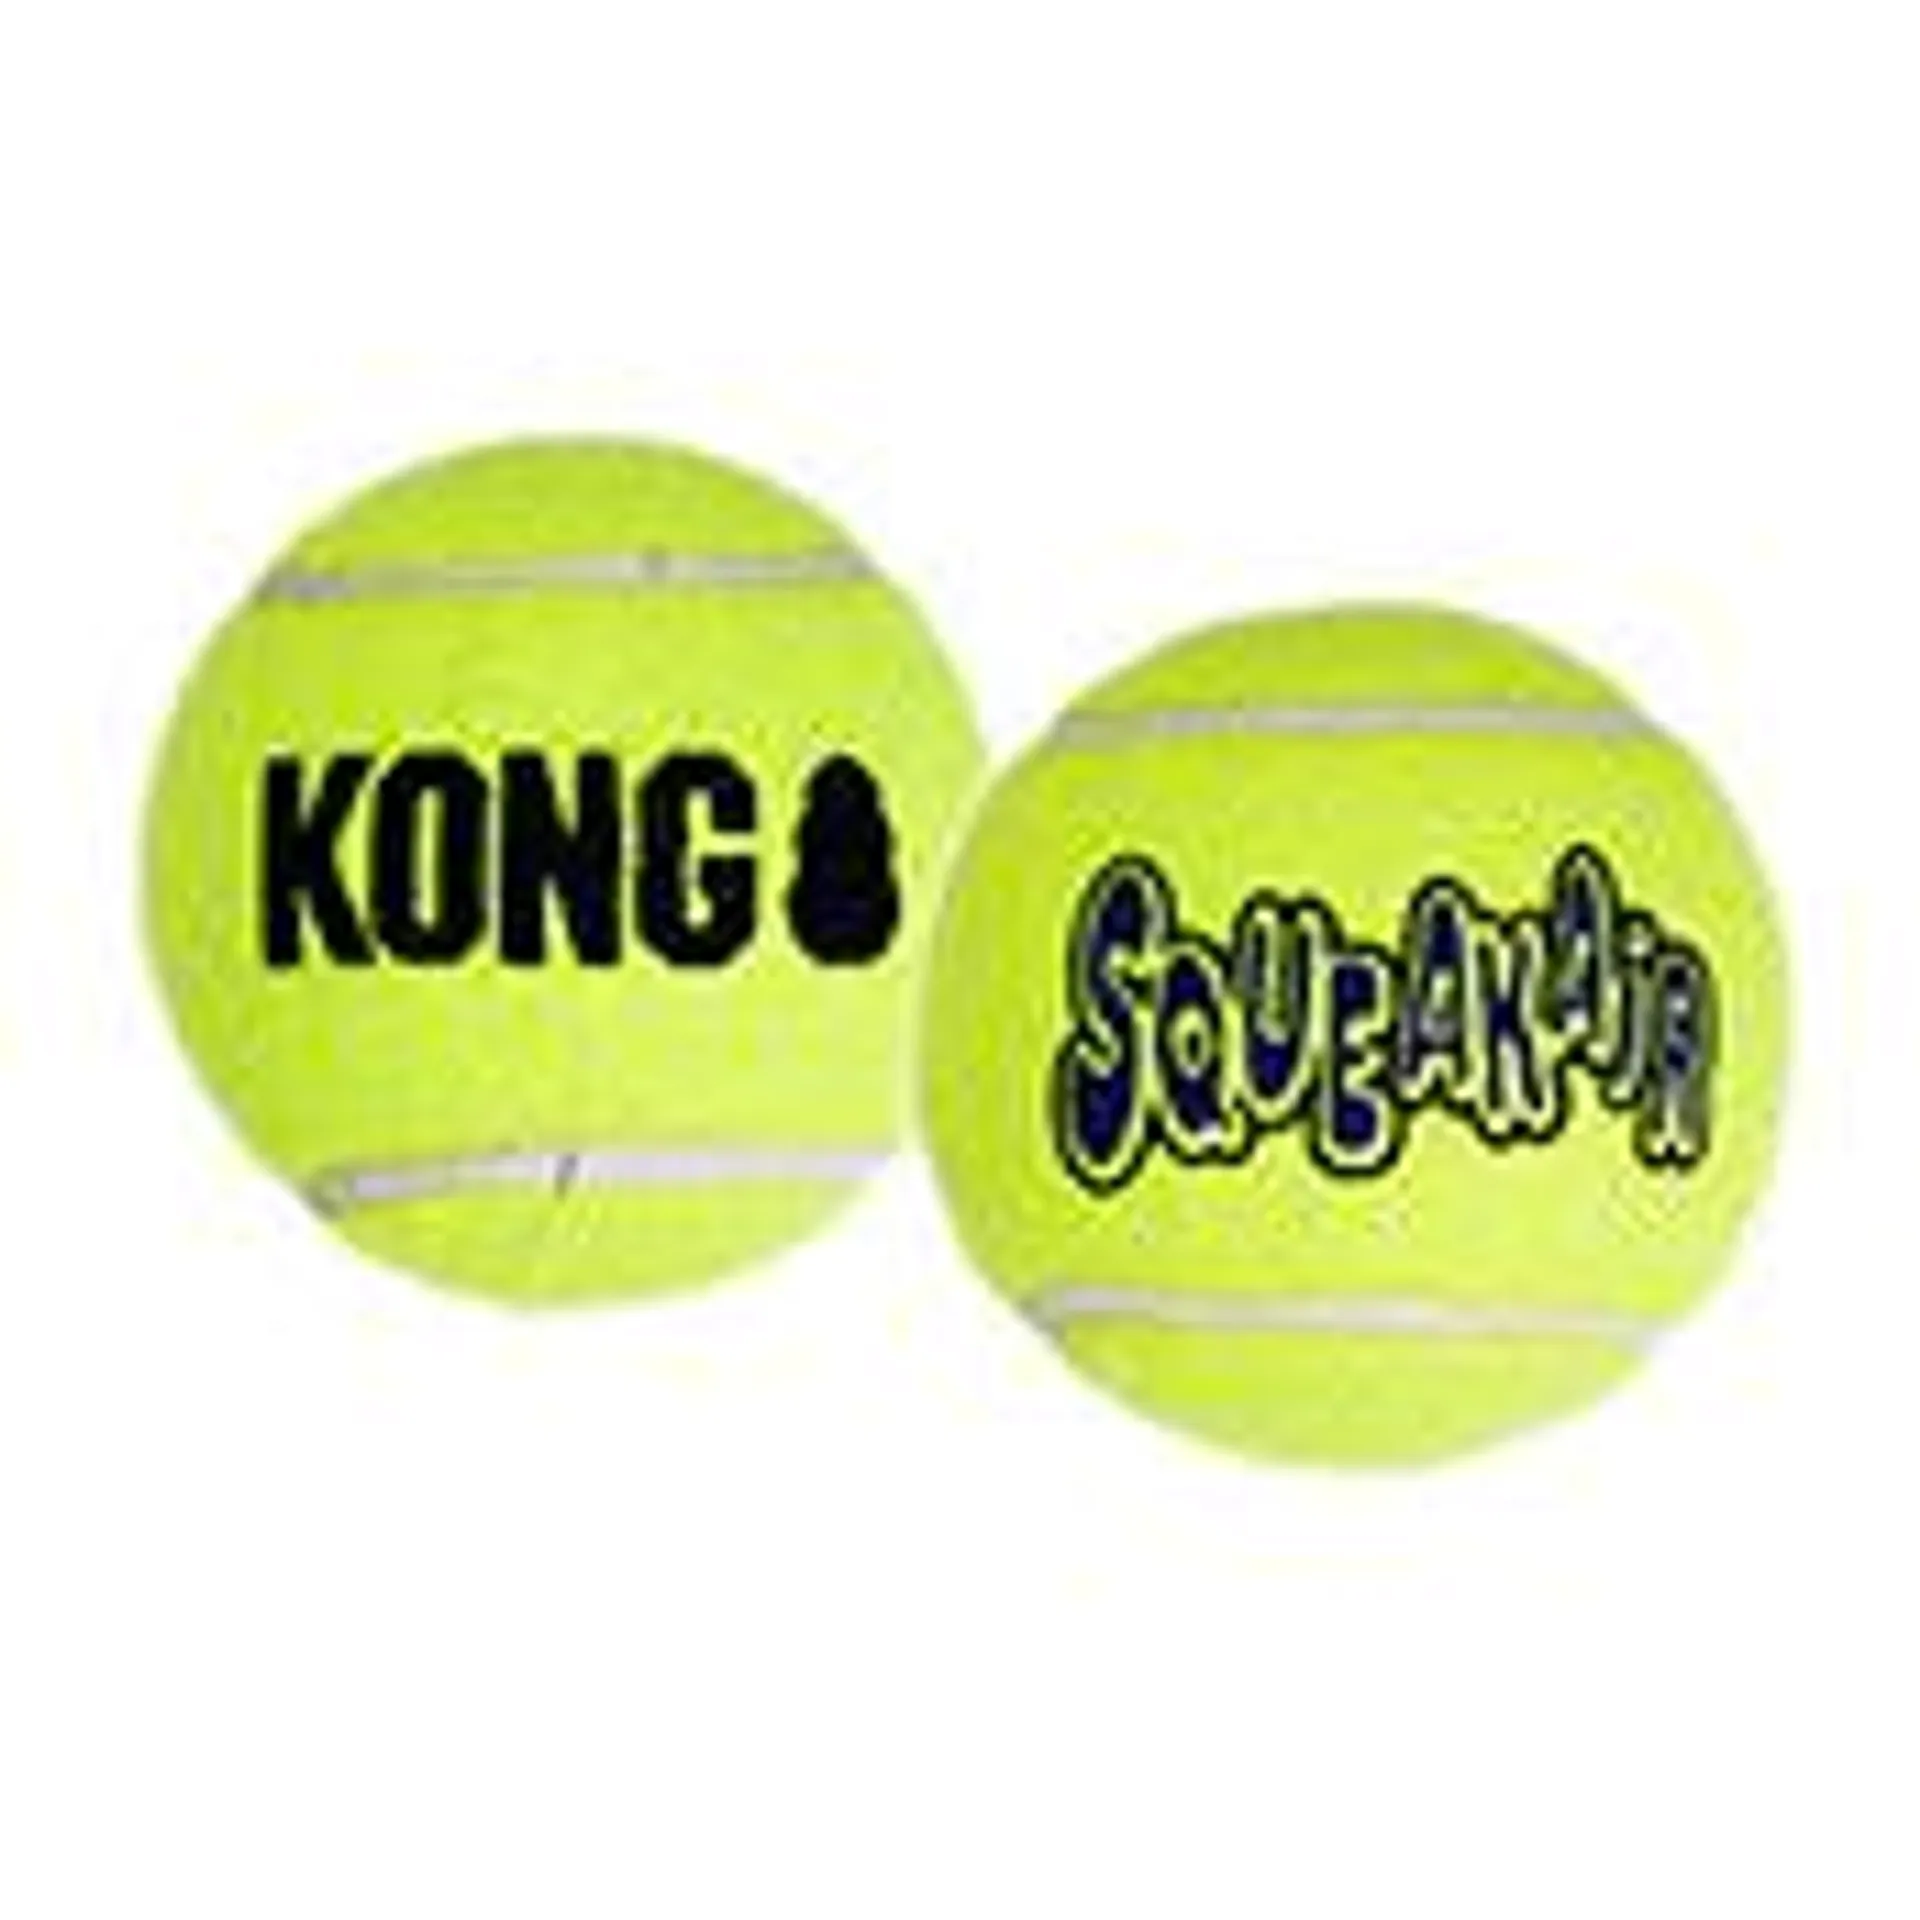 Kong SqueakAir Ball Dog Toy